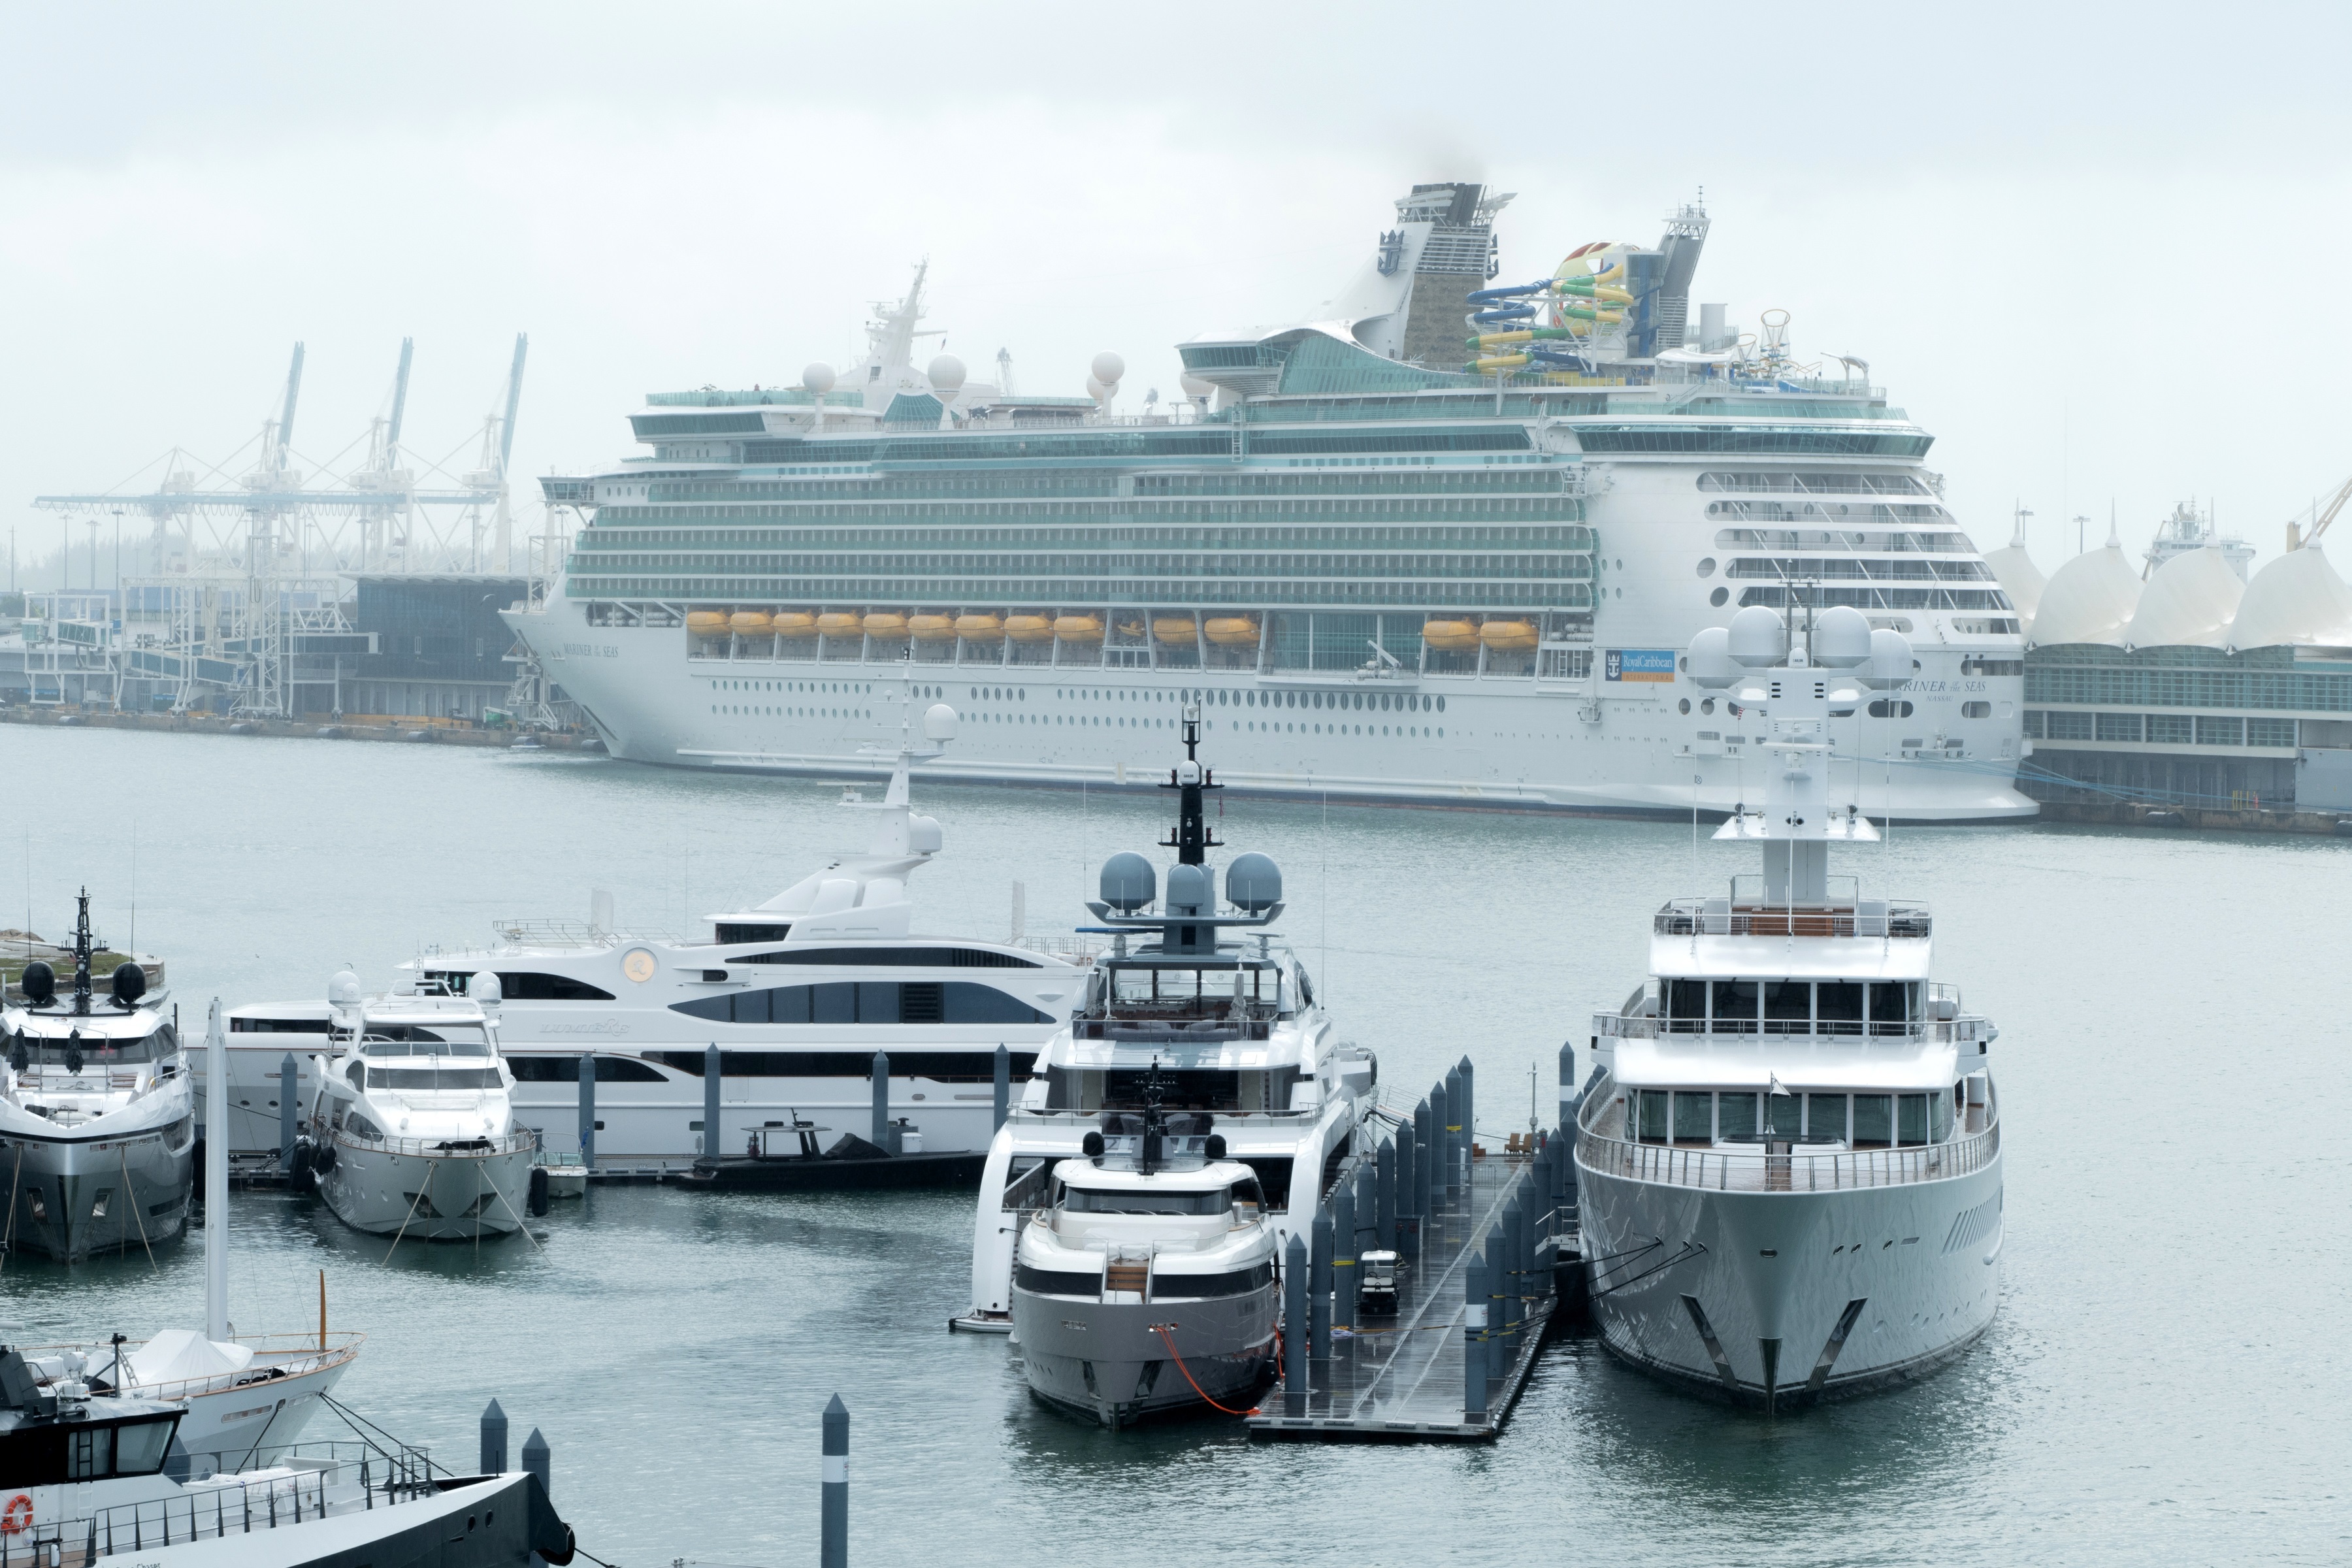 File photo of a Royal Caribbean cruise ship docked in Miami Bay (USA) (EFE/Giorgio Viera)